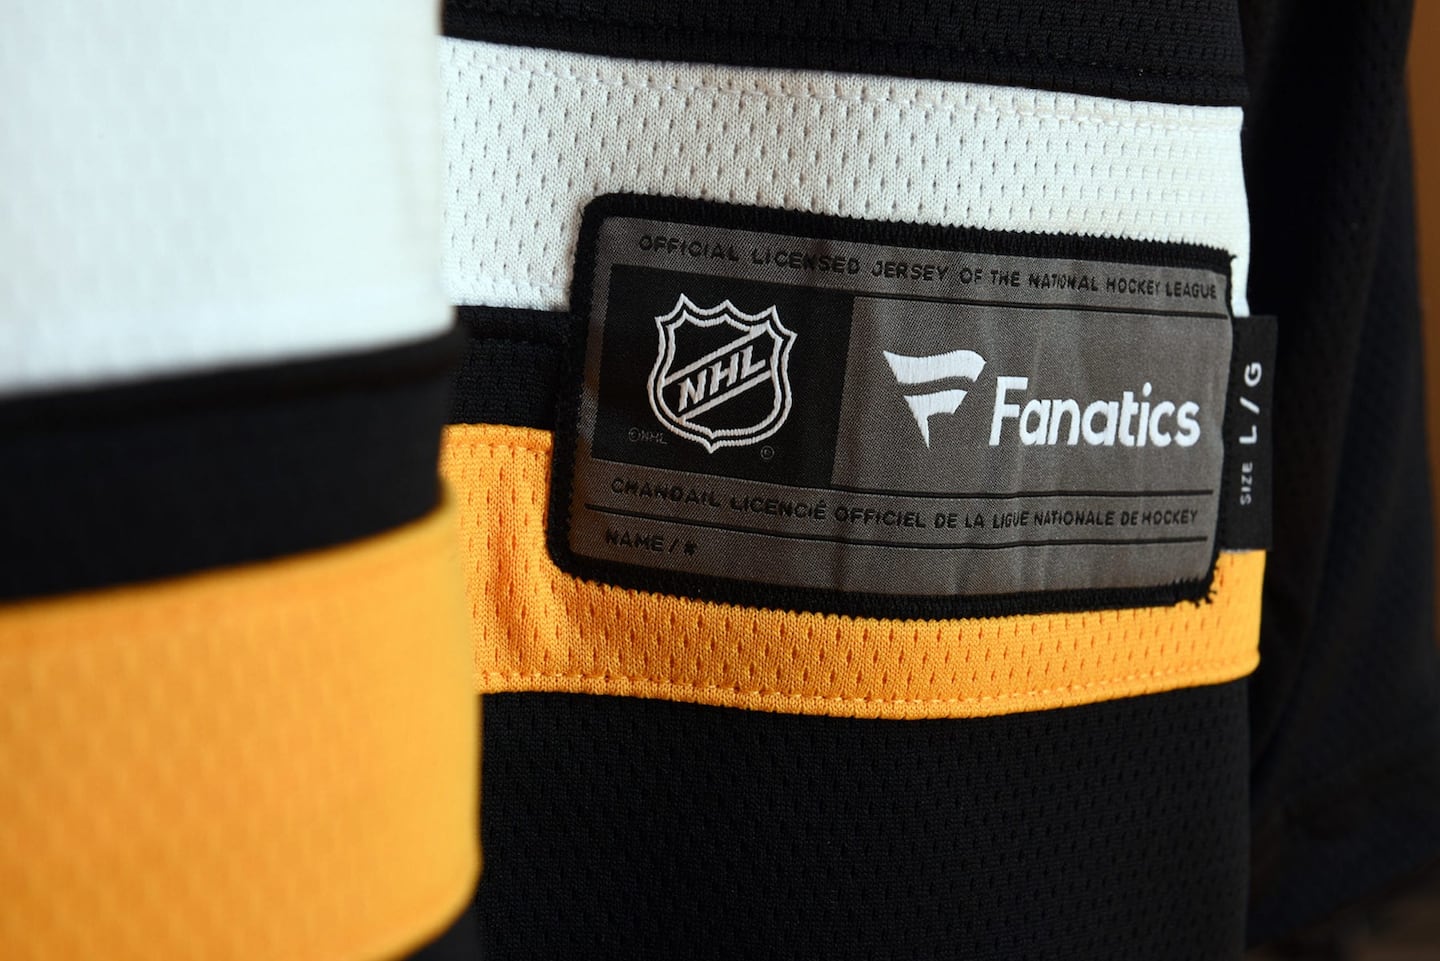 Fanatics and licensing partner NHL.